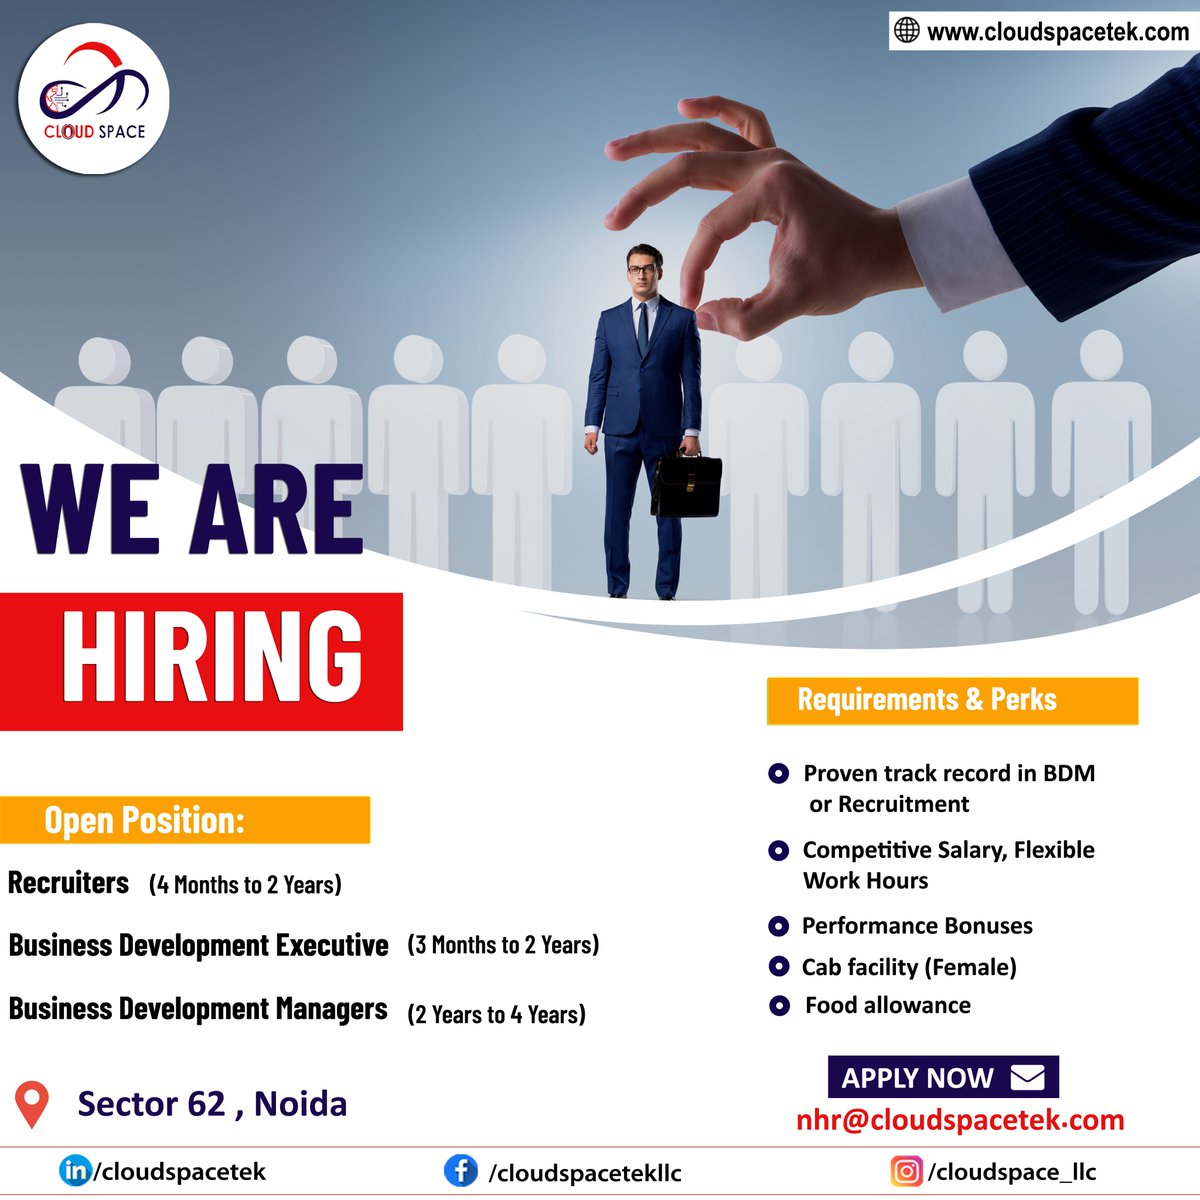 𝐂𝐥𝐨𝐮𝐝 𝐒𝐩𝐚𝐜𝐞 𝐋𝐋𝐂 𝐢𝐬 𝐇𝐢𝐫𝐢𝐧𝐠 𝐟𝐨𝐫 𝐍𝐨𝐢𝐝𝐚 𝐒𝐞𝐜𝐭𝐨𝐫 62 𝐋𝐨𝐜𝐚𝐭𝐢𝐨𝐧: To apply, please send your resume to nhr@cloudspacetek.com. #CloudSpaceLLC #Recruiters #StaffingSolutions #HRJobs #HiringNow #NoidaJobs #BusinessDevelopment #SalesJobs #BDE